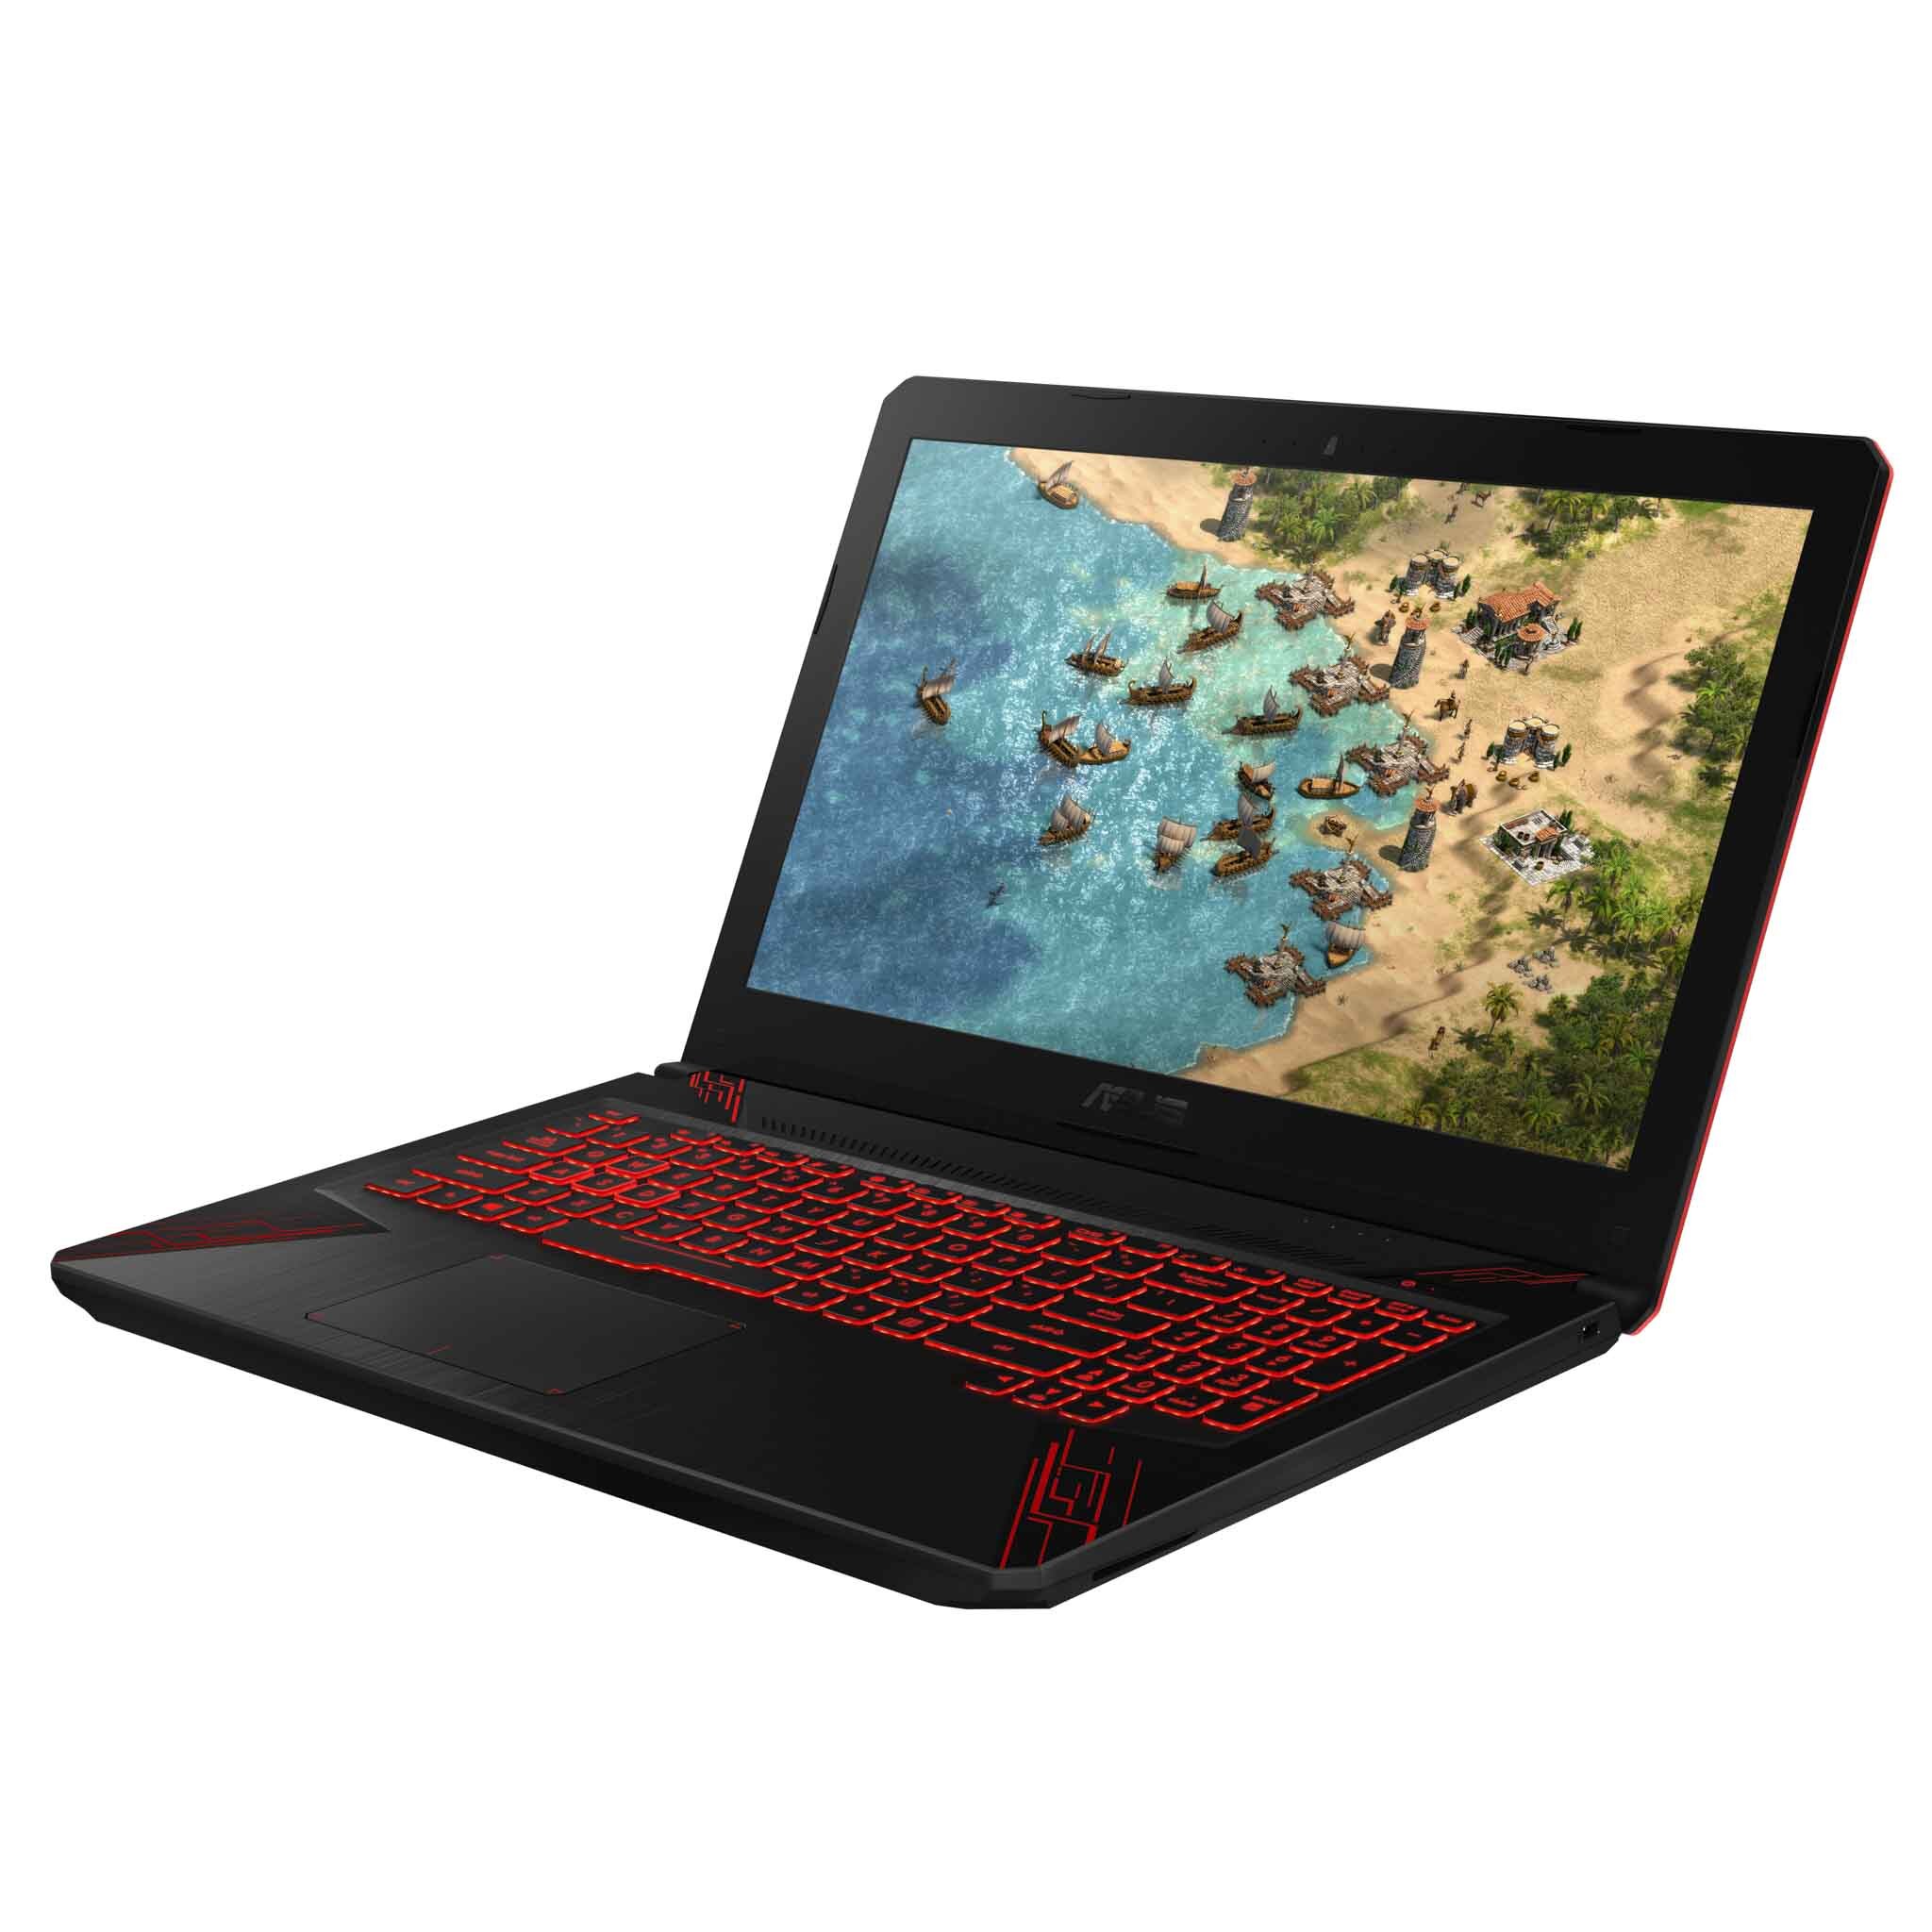 Laptop Asus TUF Gaming FX504GD- E4262T - Intel core i5, 8GB RAM, HDD 1TB + SSD 128GB, Nvidia GeForce GTX 1050 4GB GDR5, 15.6 inch